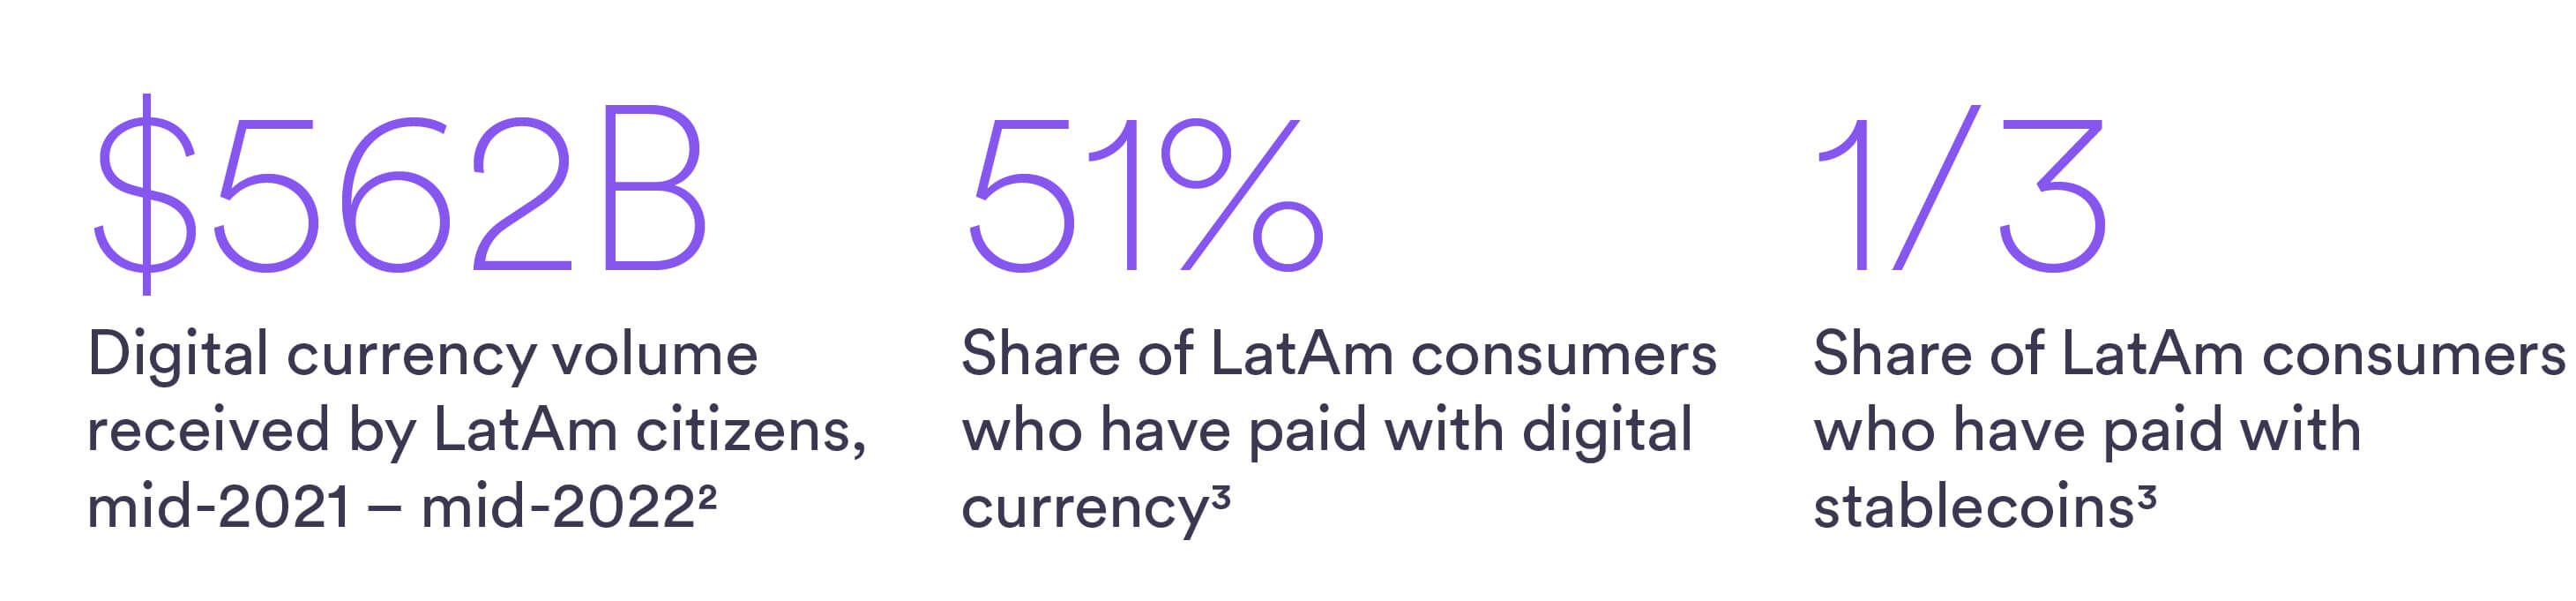 digital-currency-use-in-Latin-America